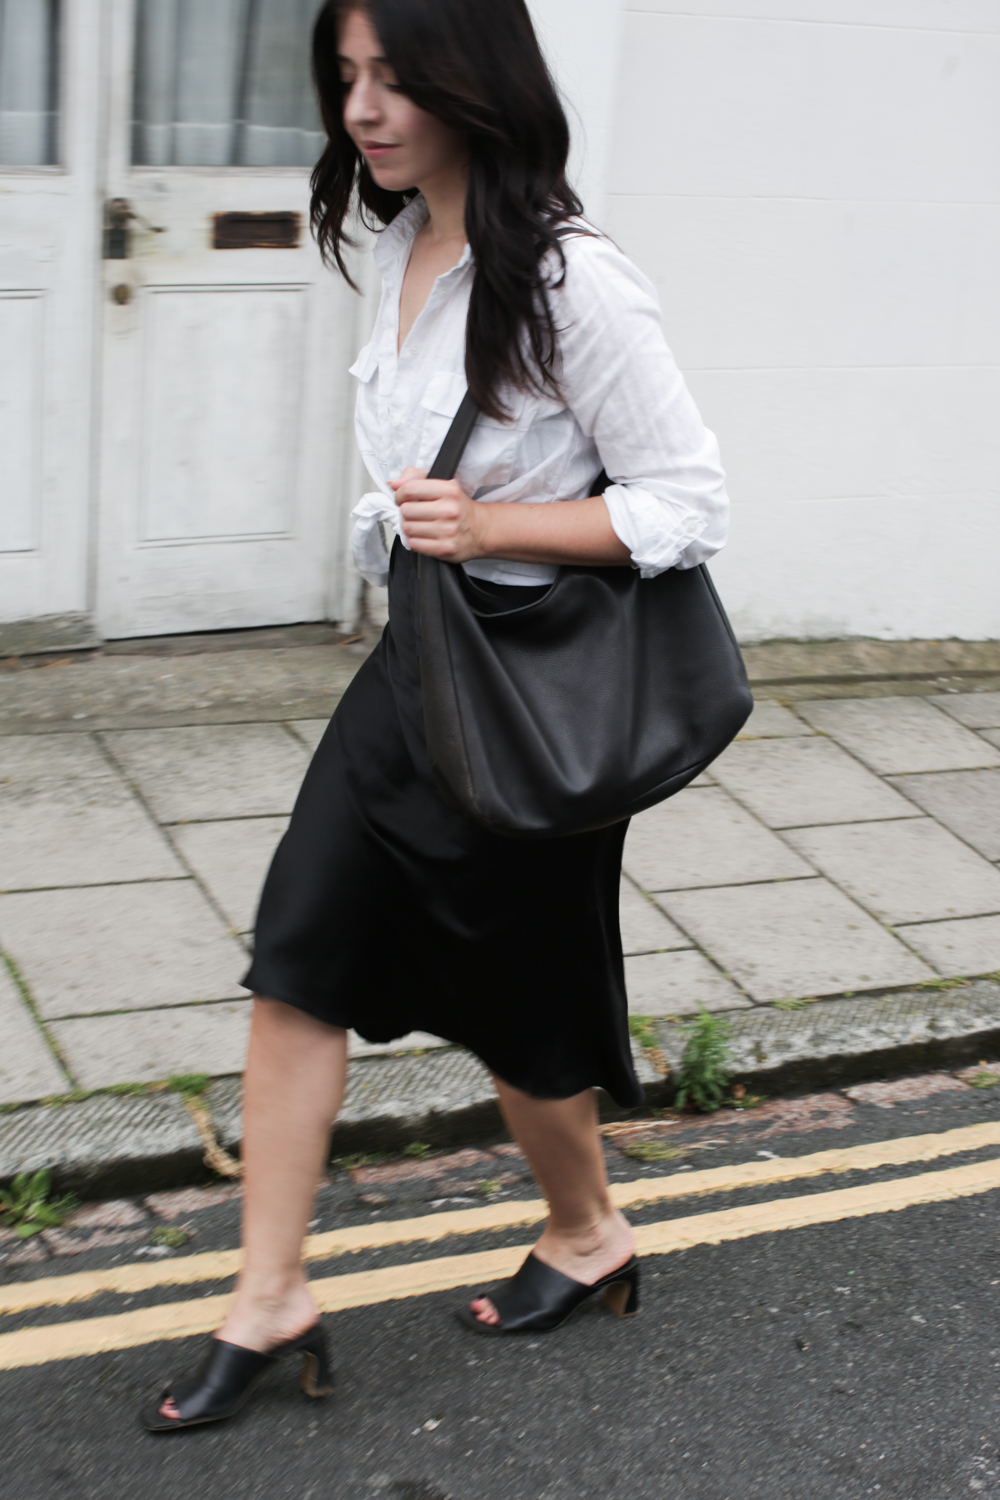 Besma walks with slouchy black handbag